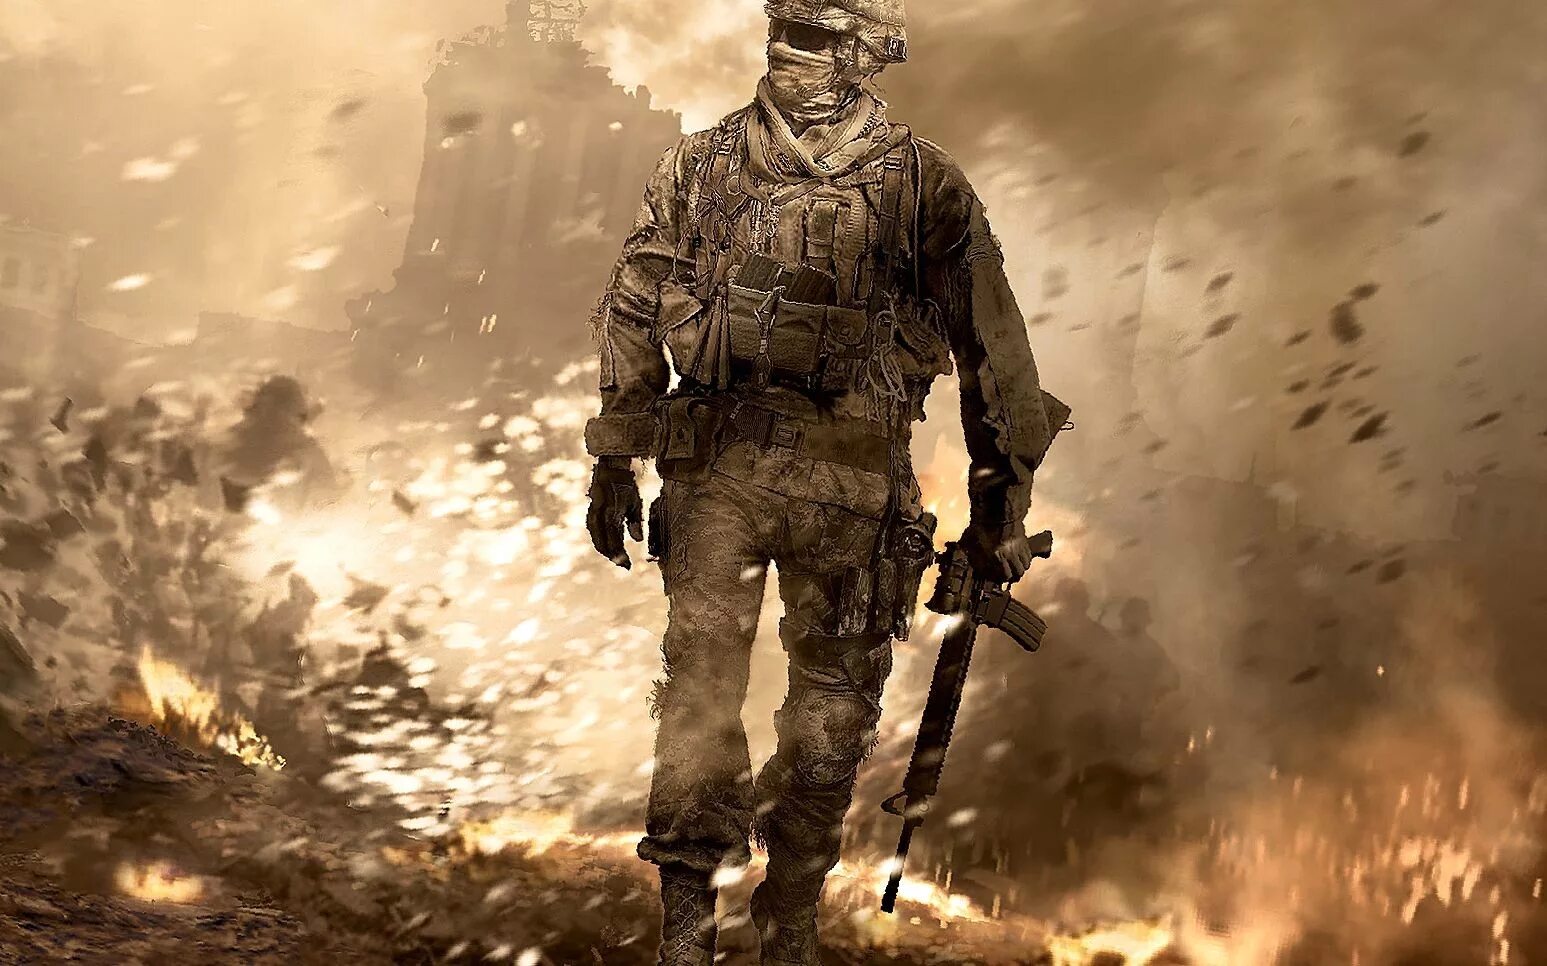 Call of Duty: Modern Warfare 2. Call of Duty 4 Modern Warfare. Call of Duty mw2. Call of Duty 4 Modern Warfare 2. Калл оф дути модерн варфайр